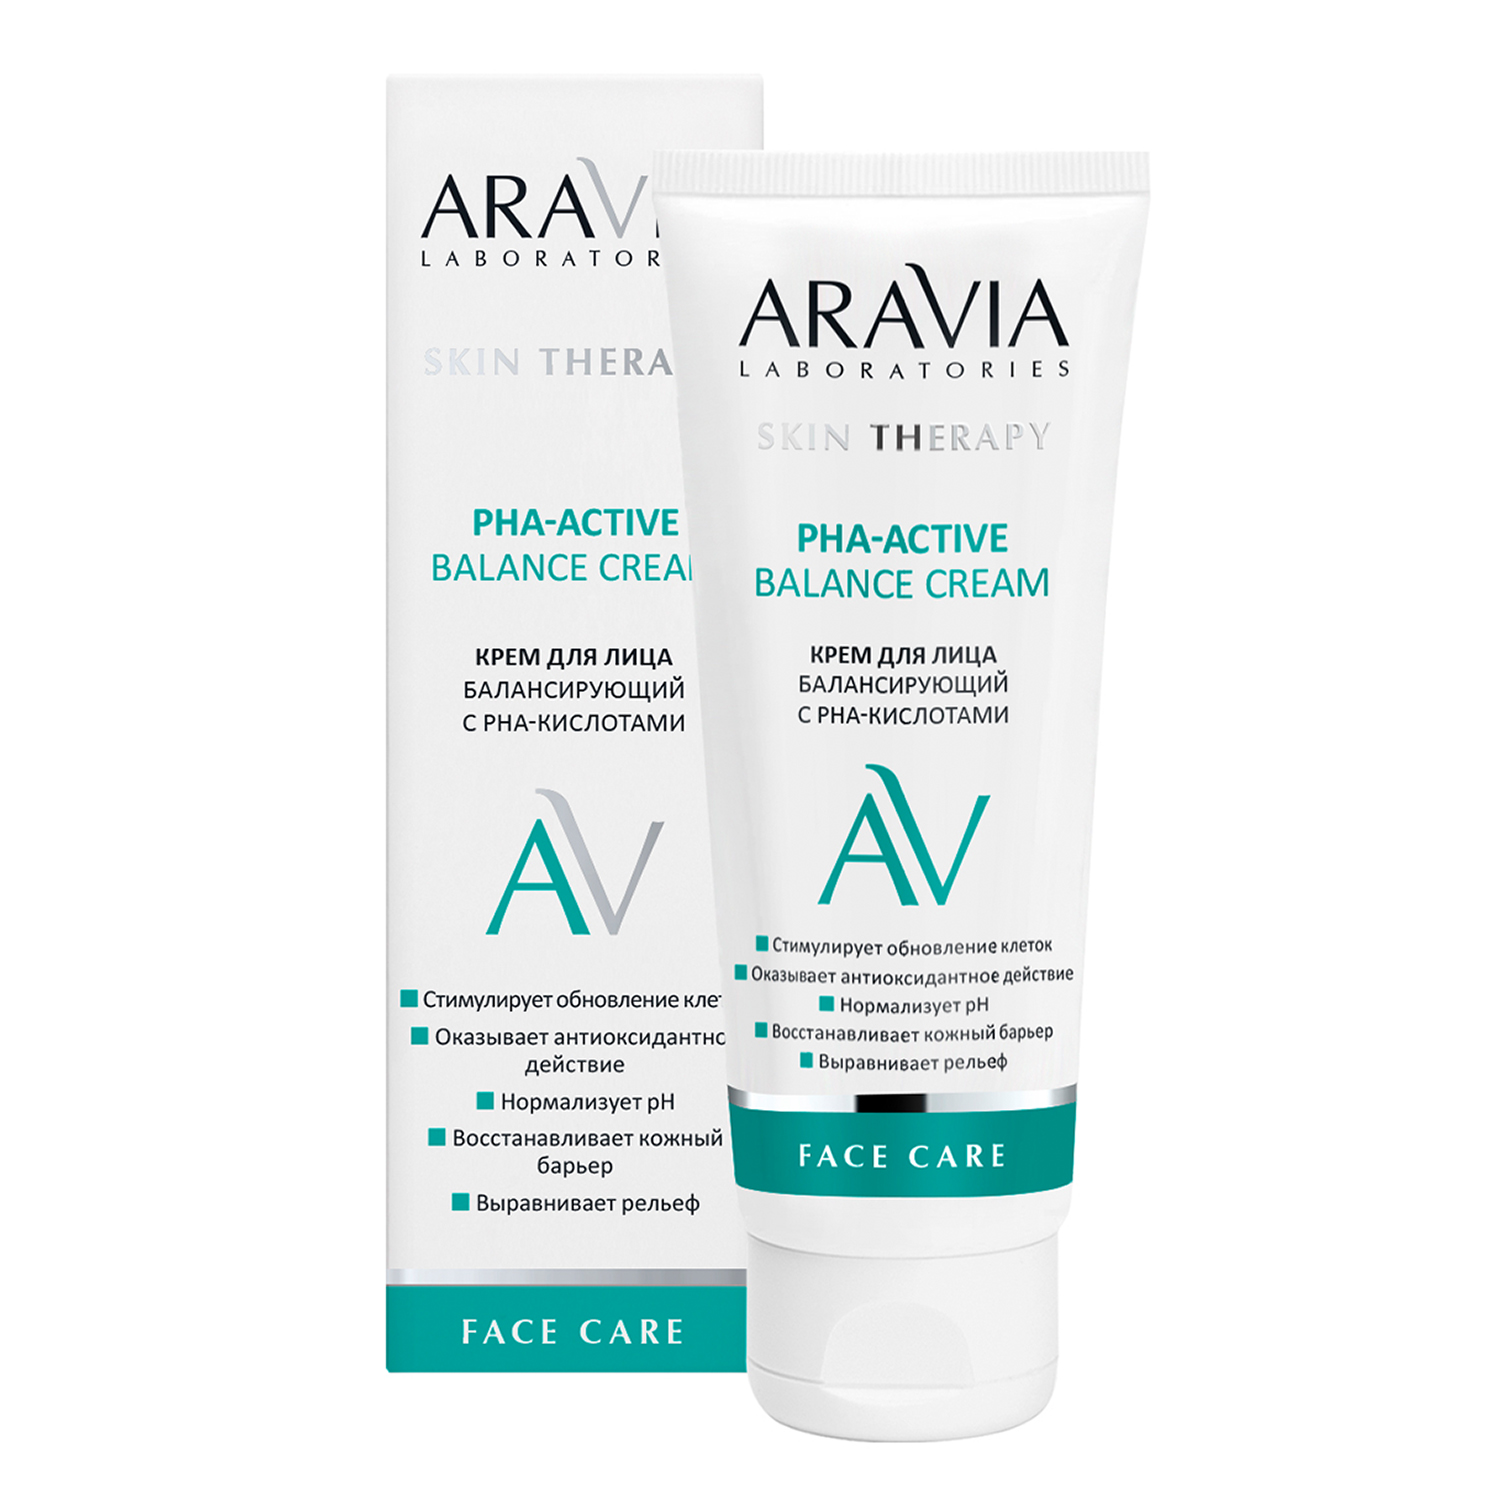 Крем для лица ARAVIA Laboratories балансирующий с РНА-кислотами PHA-Active Balance Cream 50 мл - фото 4